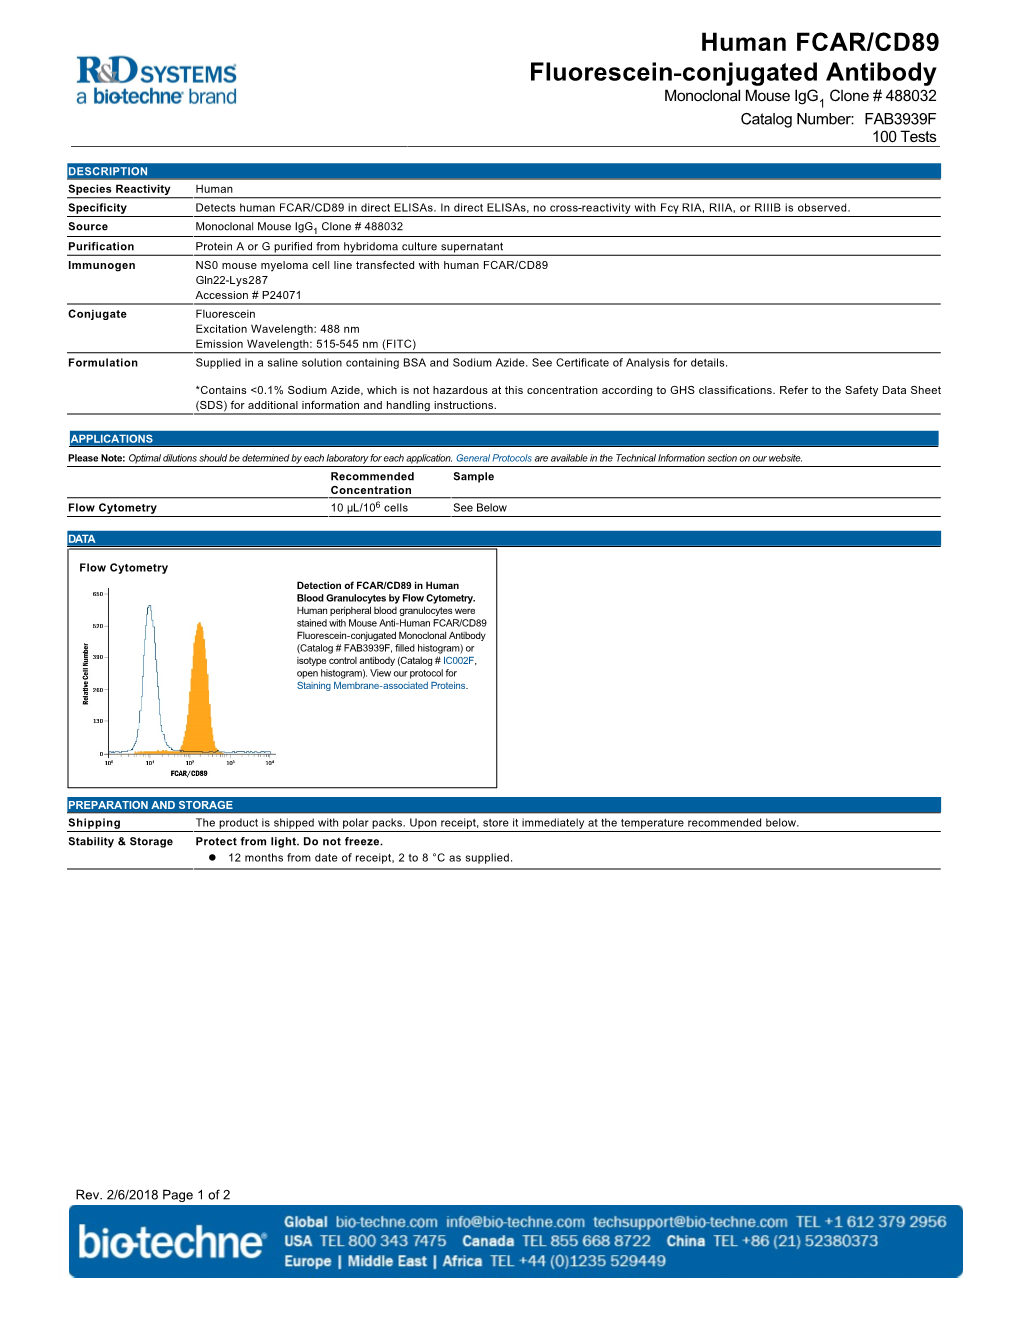 Human FCAR/CD89 Fluorescein-Conjugated Antibody